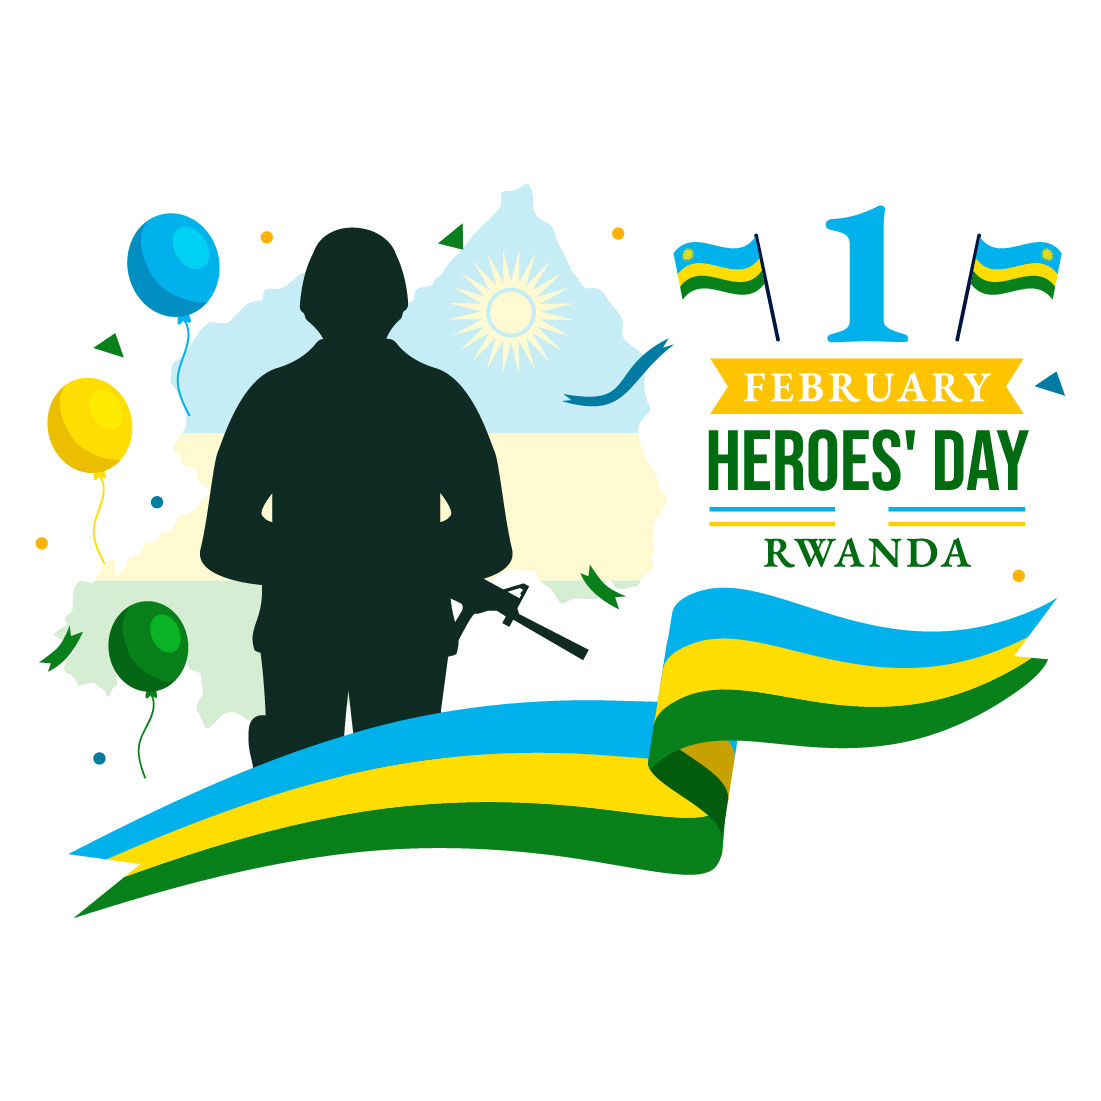 12 Rwanda Heroes Day Illustration preview image.